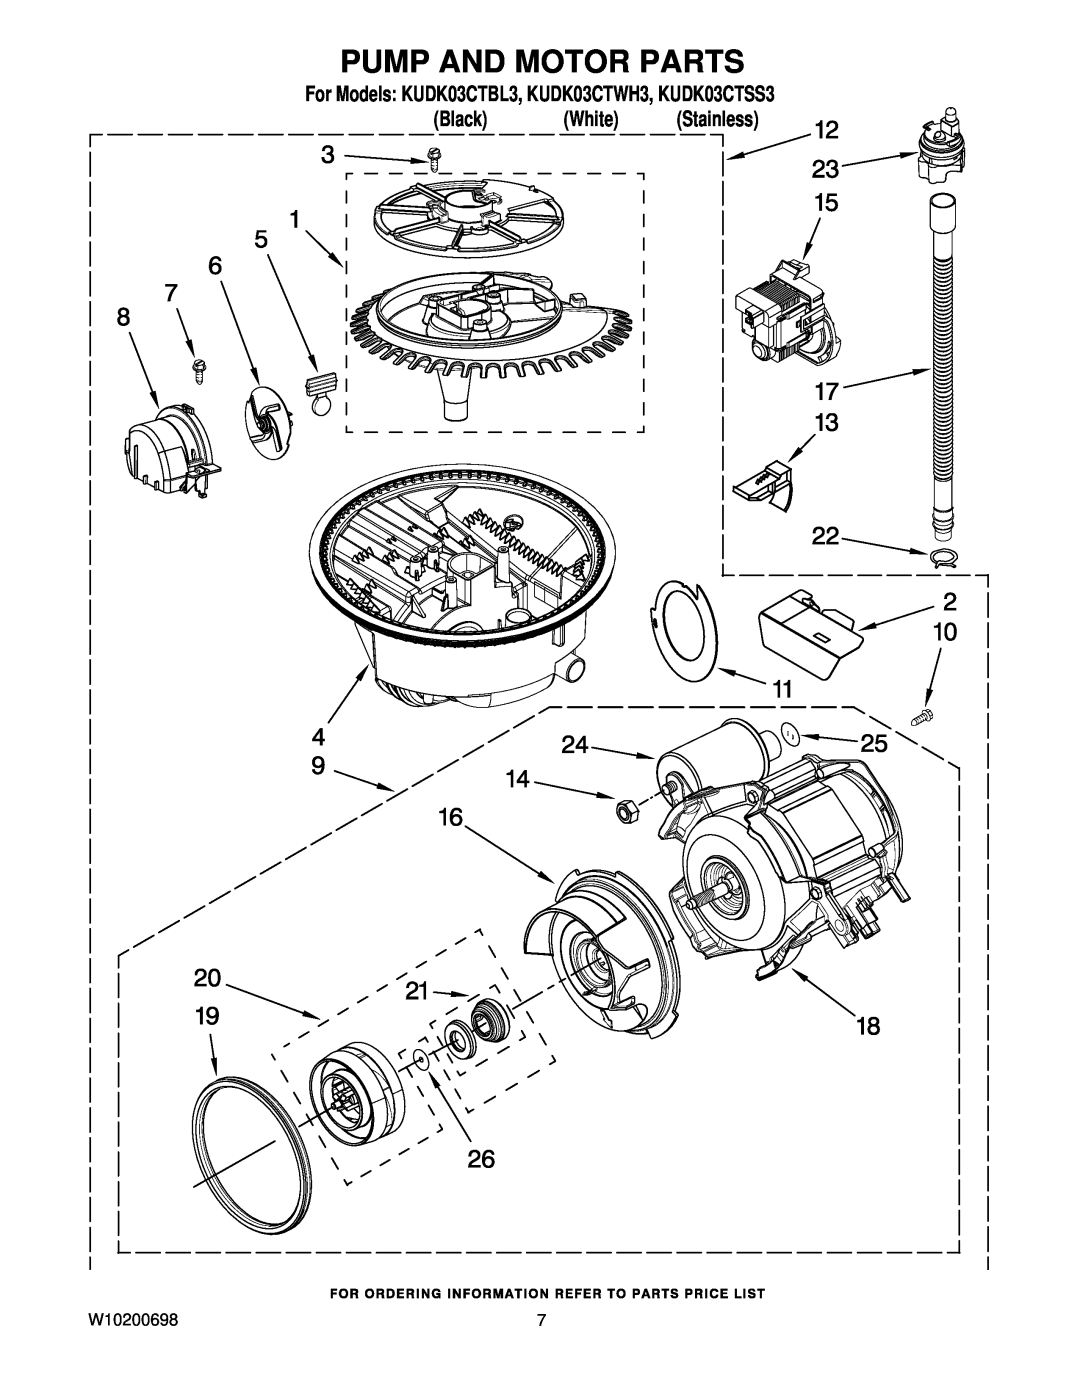 KitchenAid manual Pump And Motor Parts, For Models KUDK03CTBL3, KUDK03CTWH3, KUDK03CTSS3, Black White Stainless 